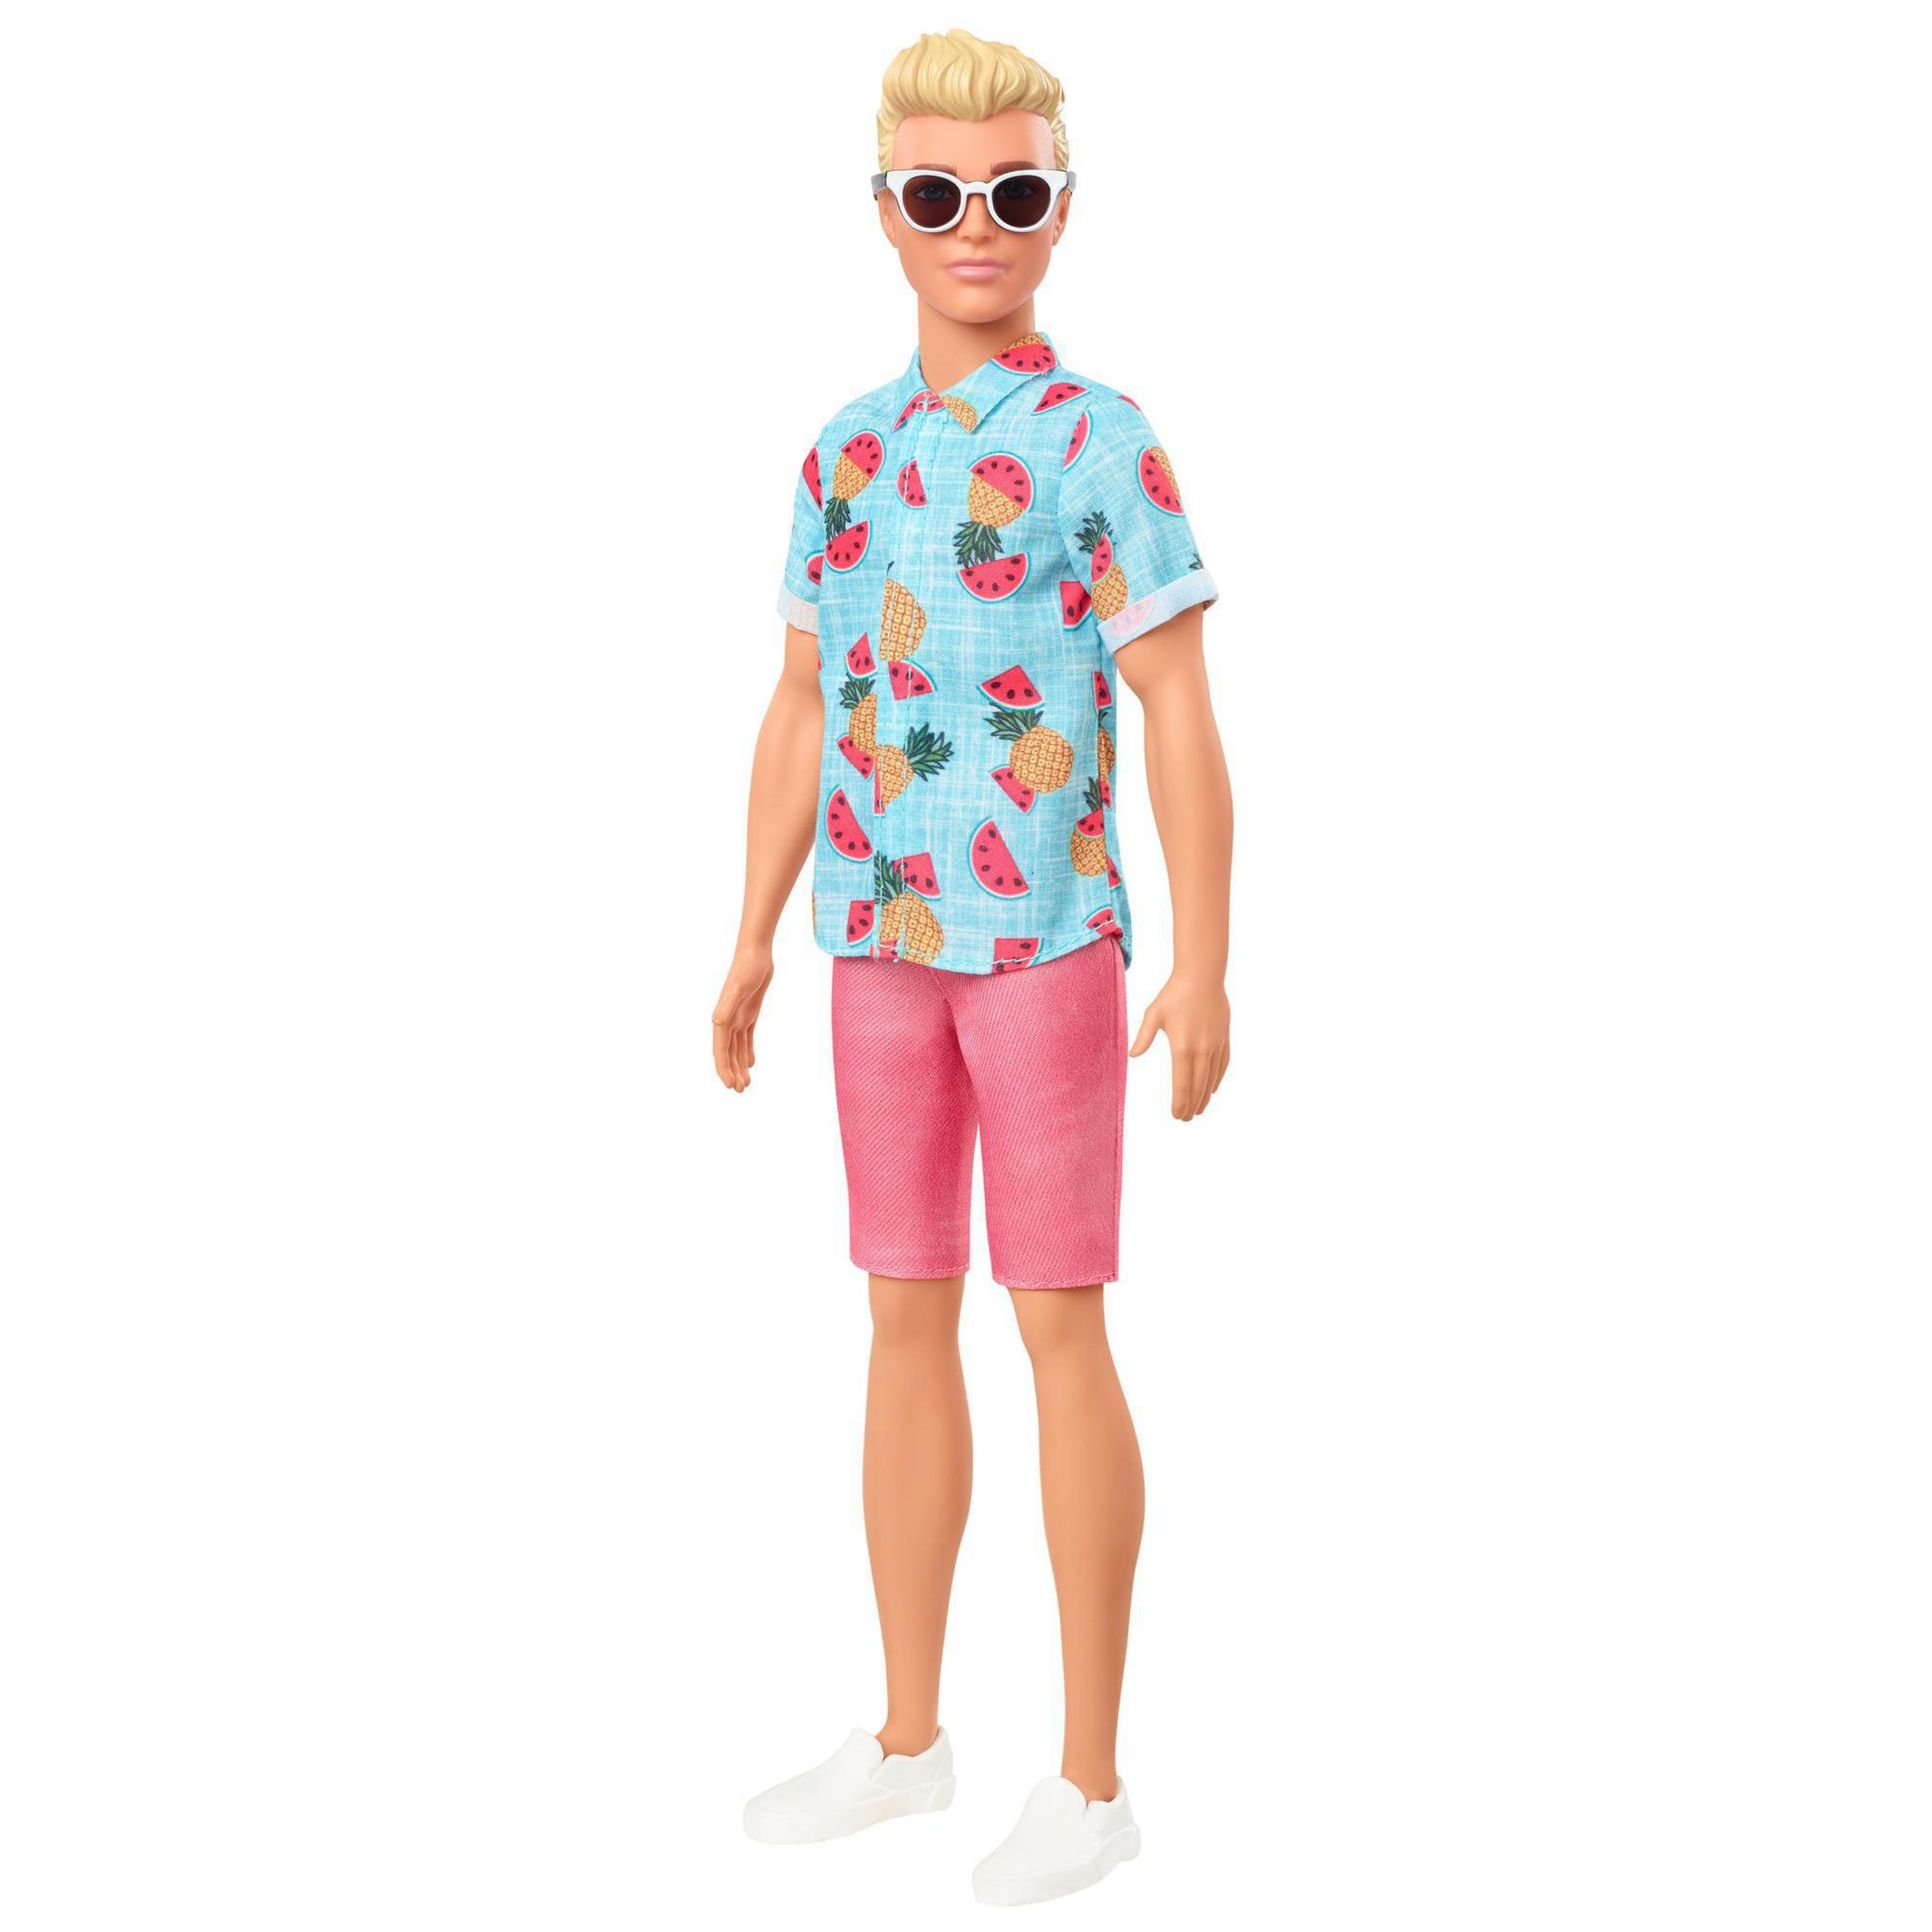 Tropical MATTEL Ken Spielzeugpuppe GRB04 Barbie Fashionista